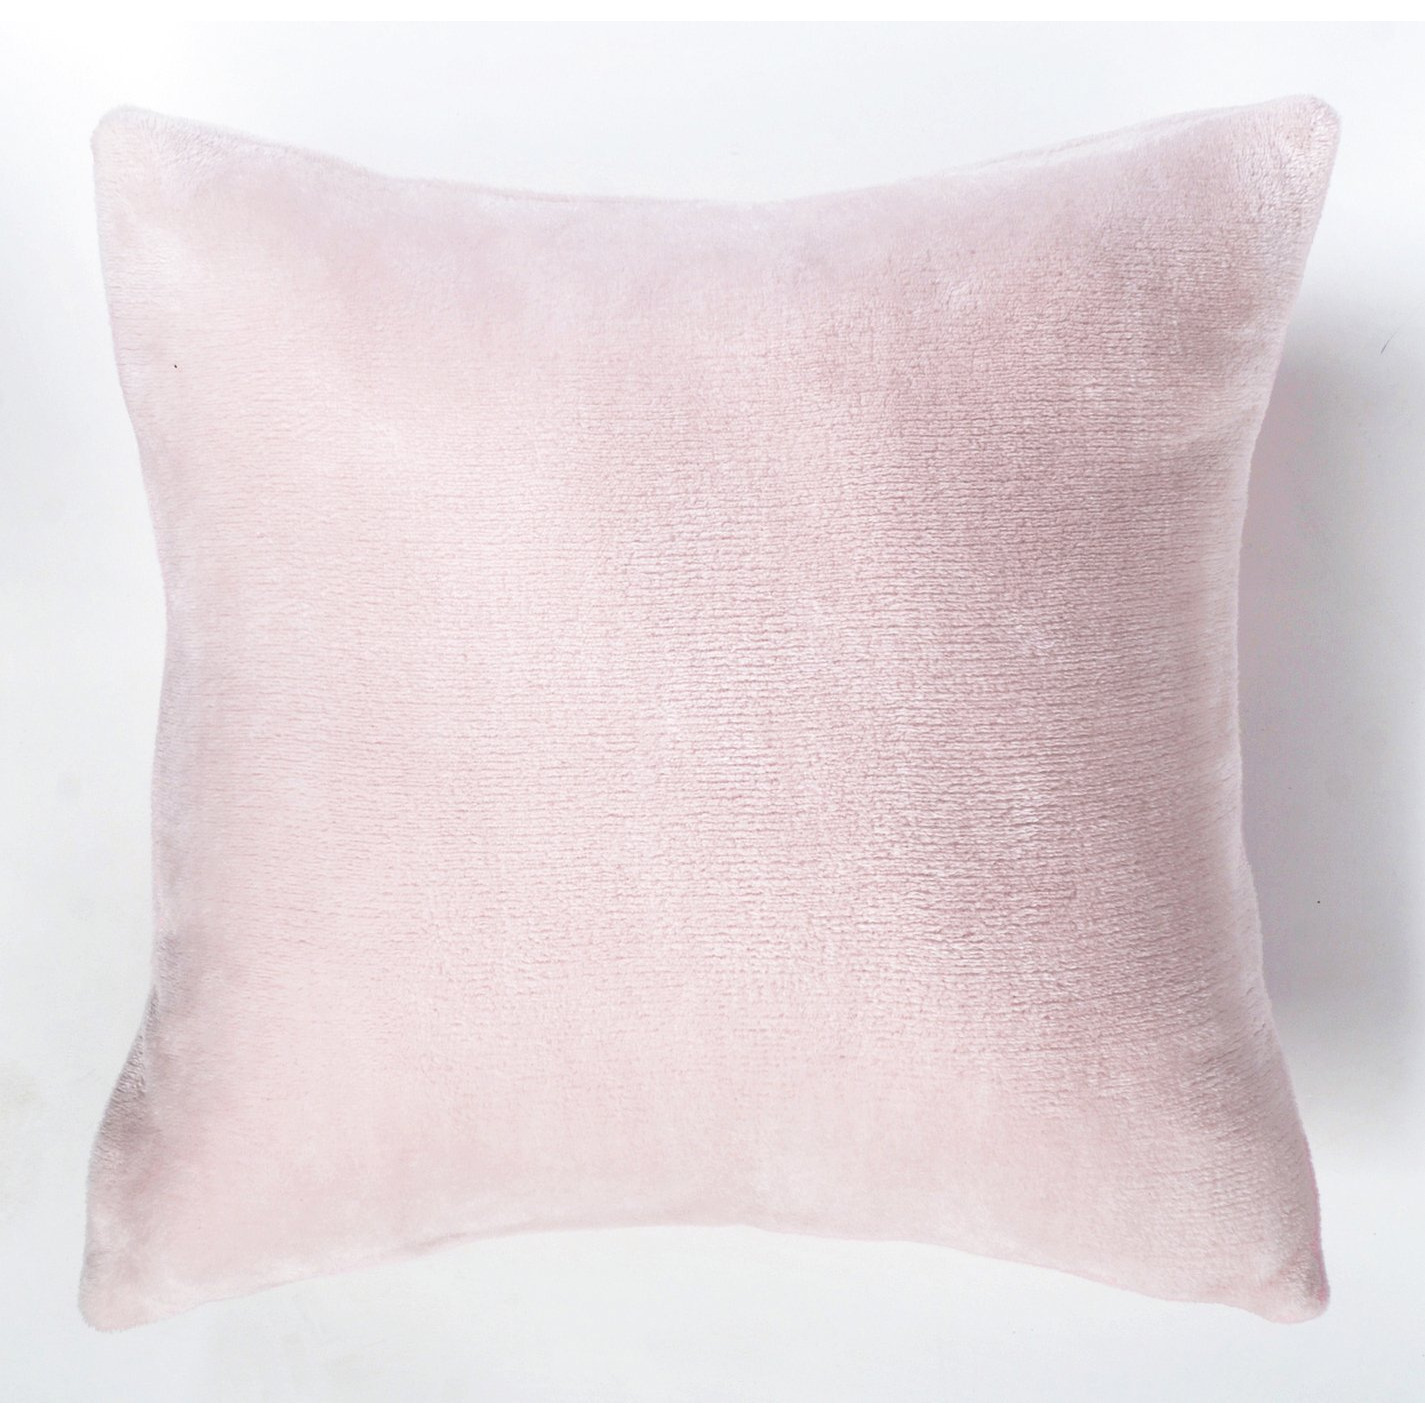 Argos Home Plain Super Soft Fleece Cushion - Pink - 43x43cm - image 1